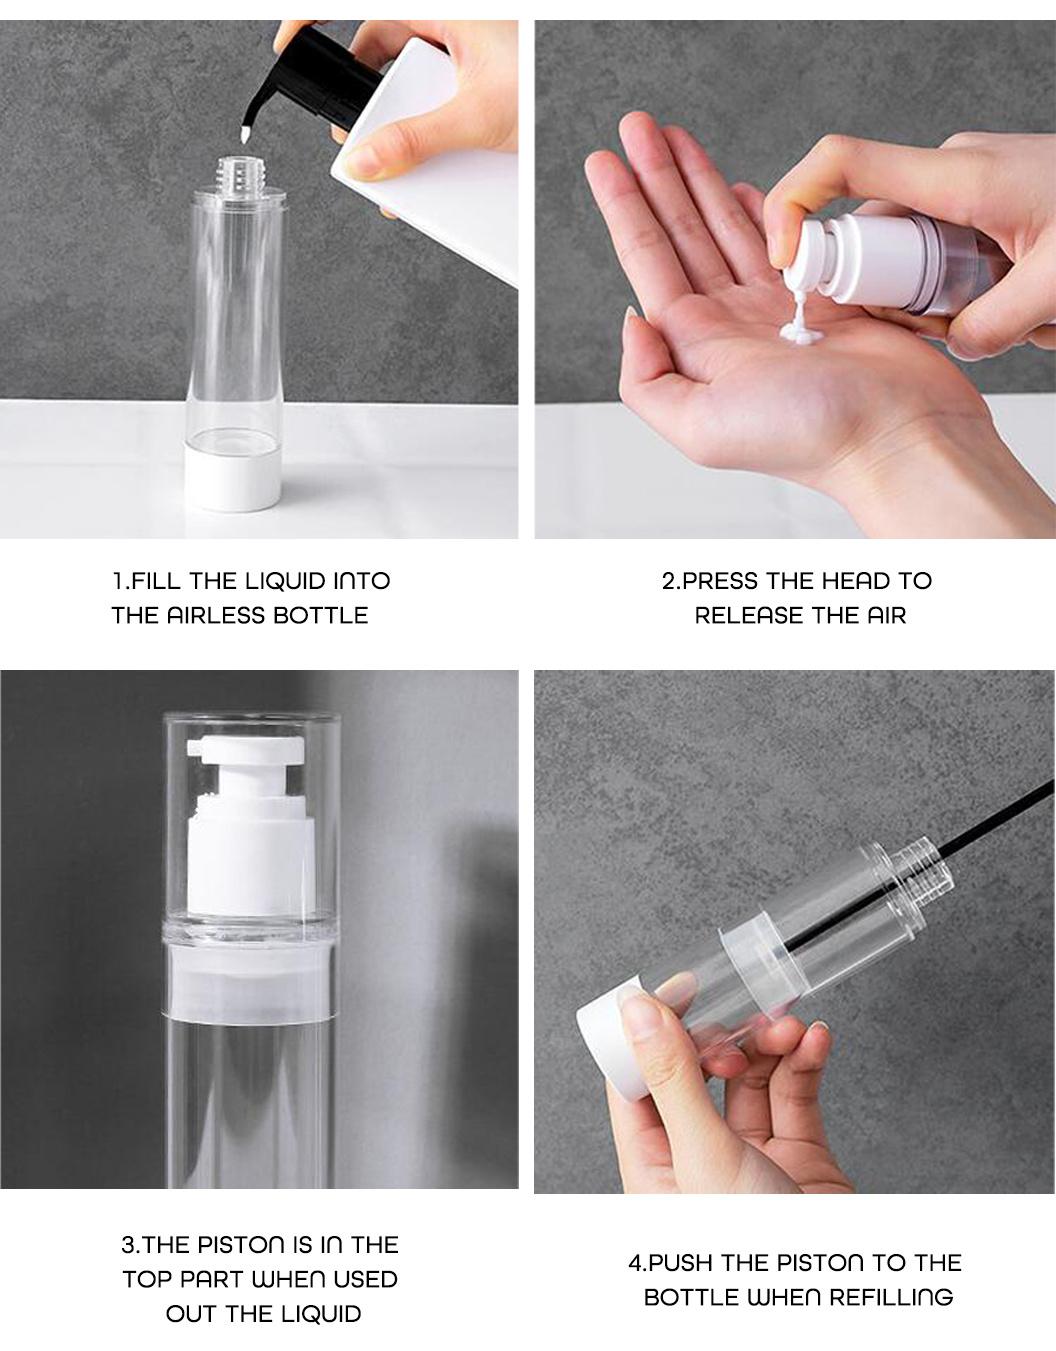 Luxury Skincare Lotion Pump Bottle Set Acrylic Plastic Bottles Cream Cosmetic Packaging